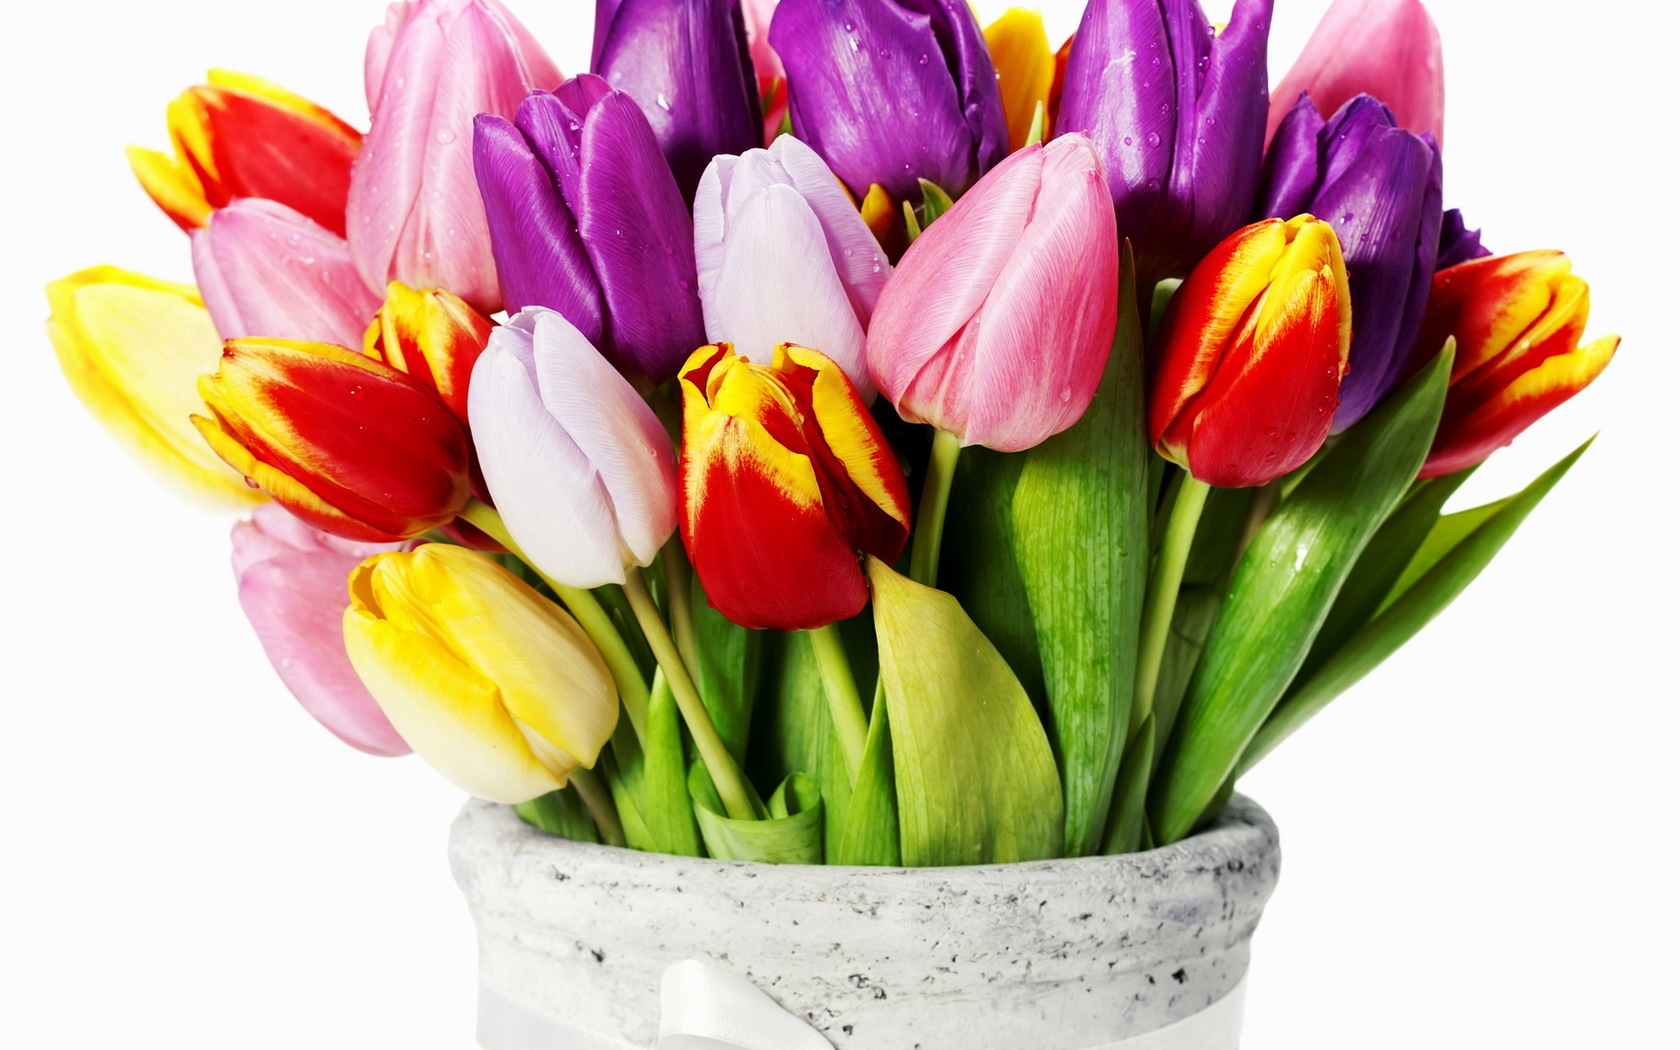 bouquets, plants, flowers, tulips